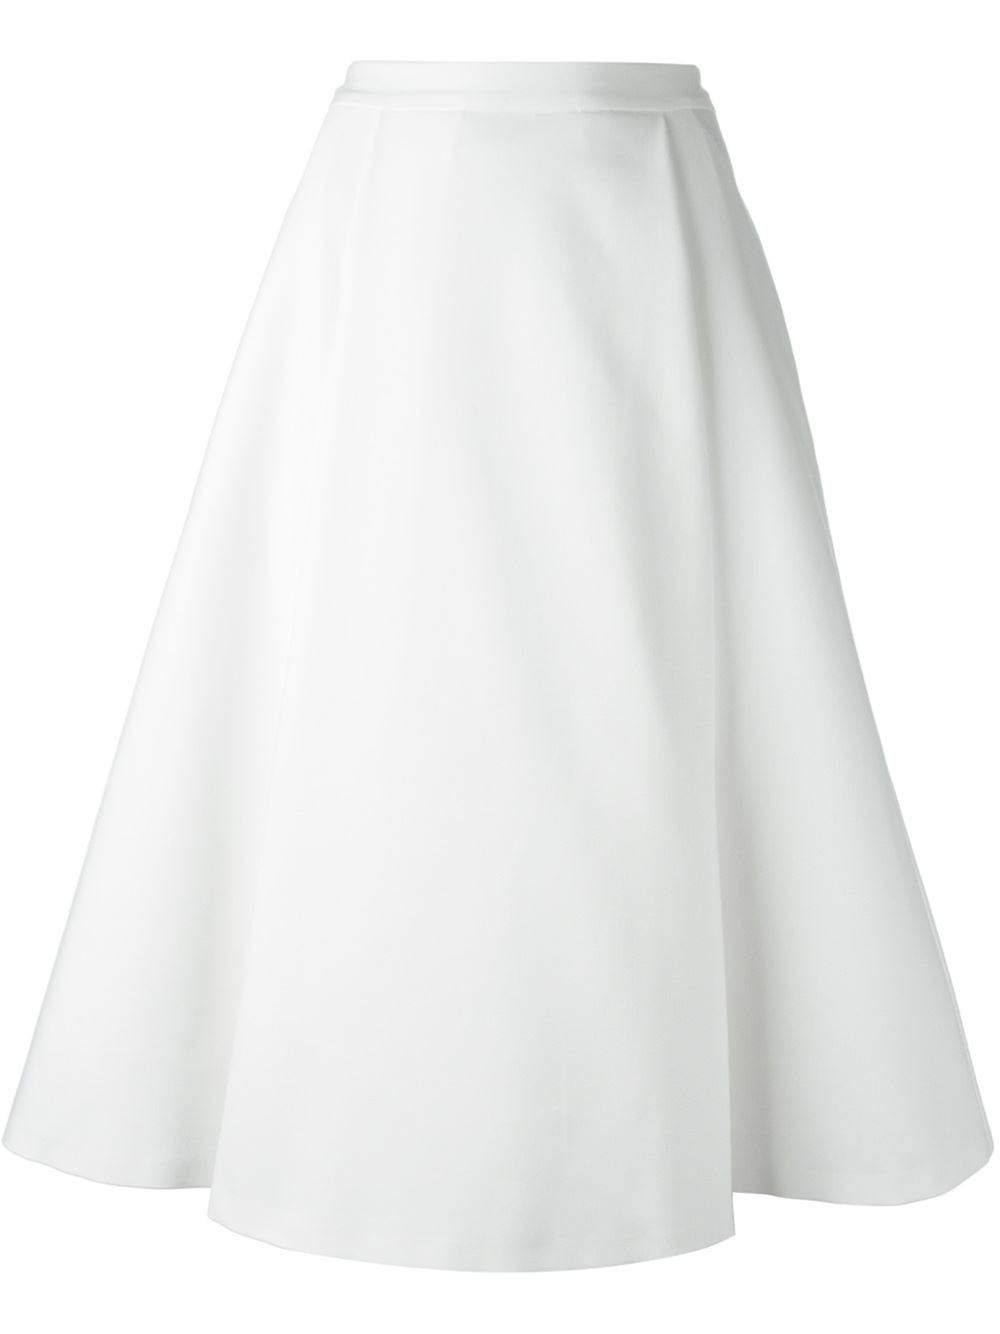 Alice + Olivia Box Pleat Midi Skirt in White - Lyst